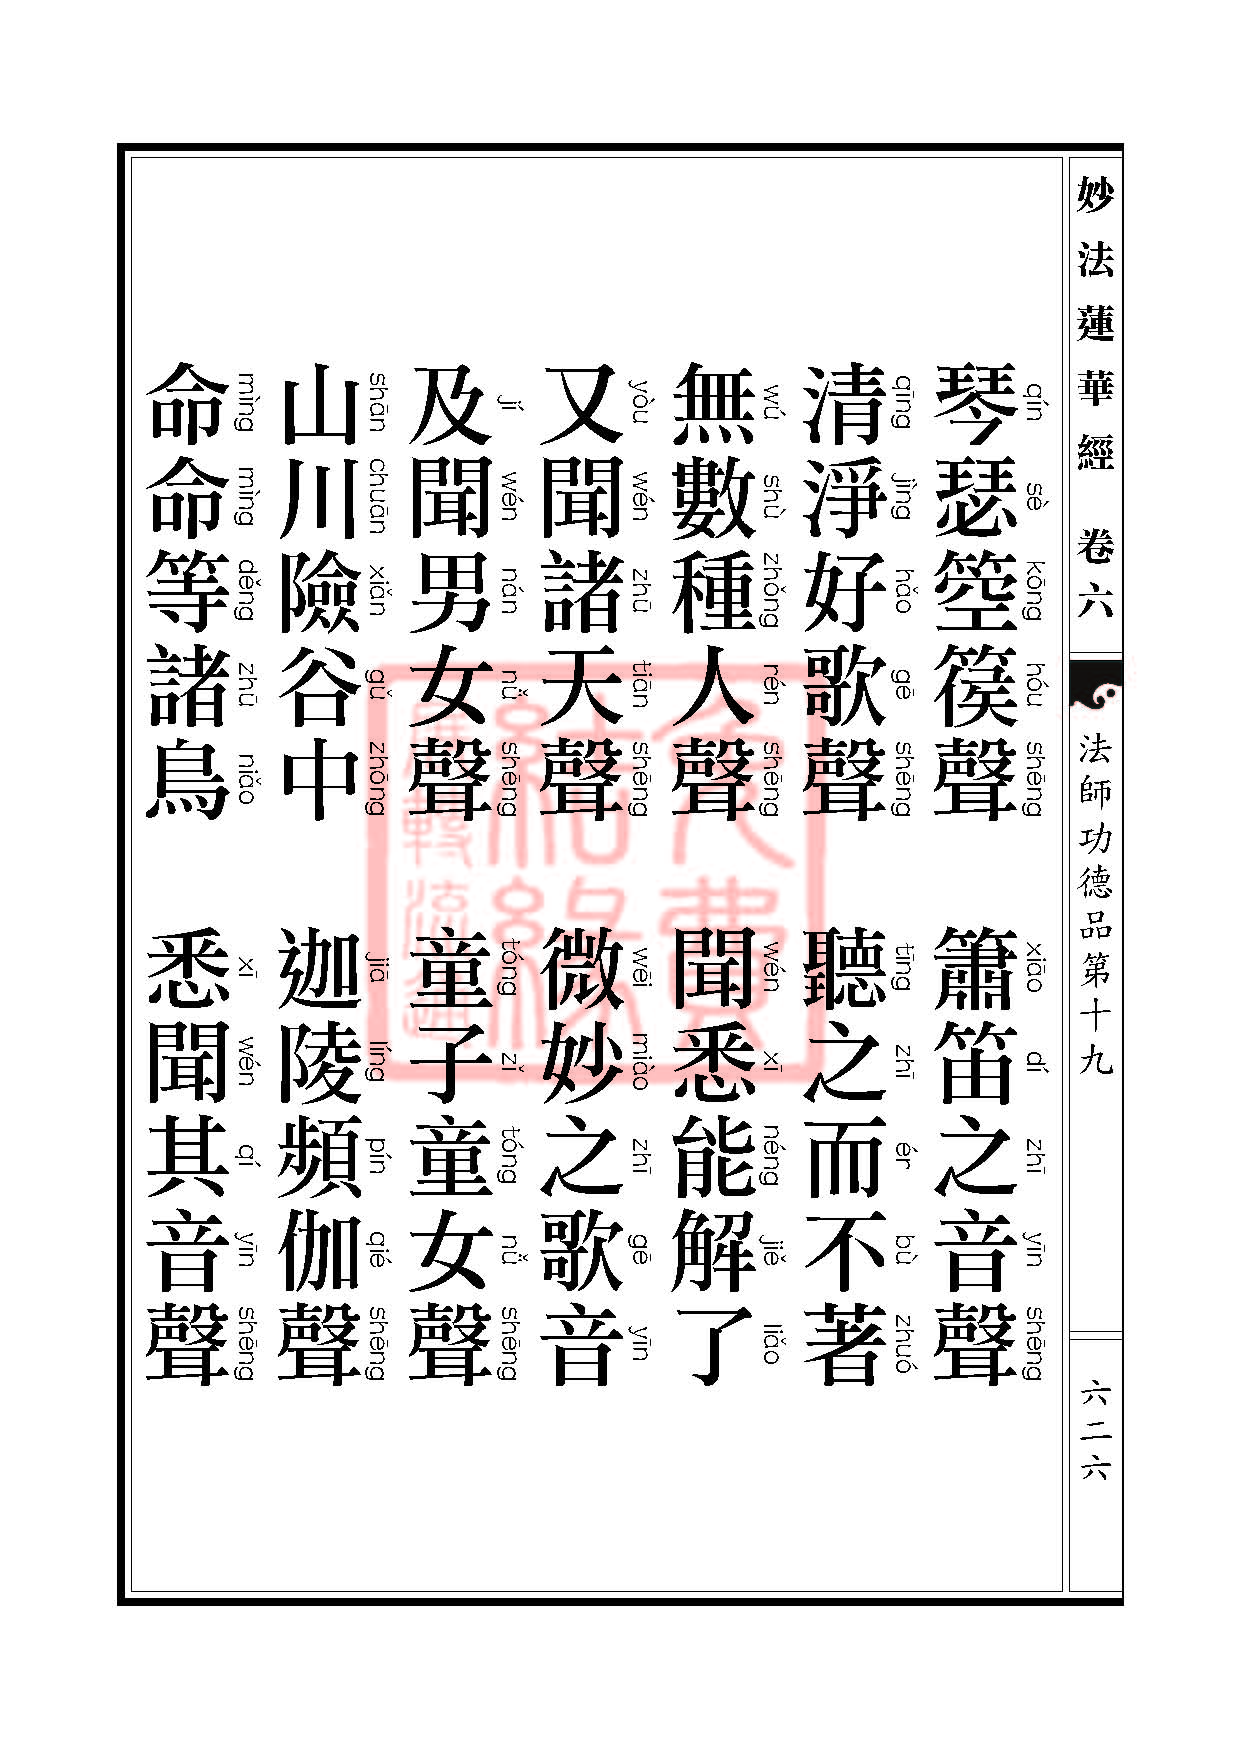 Book_FHJ_HK-A6-PY_Web_页面_626.jpg